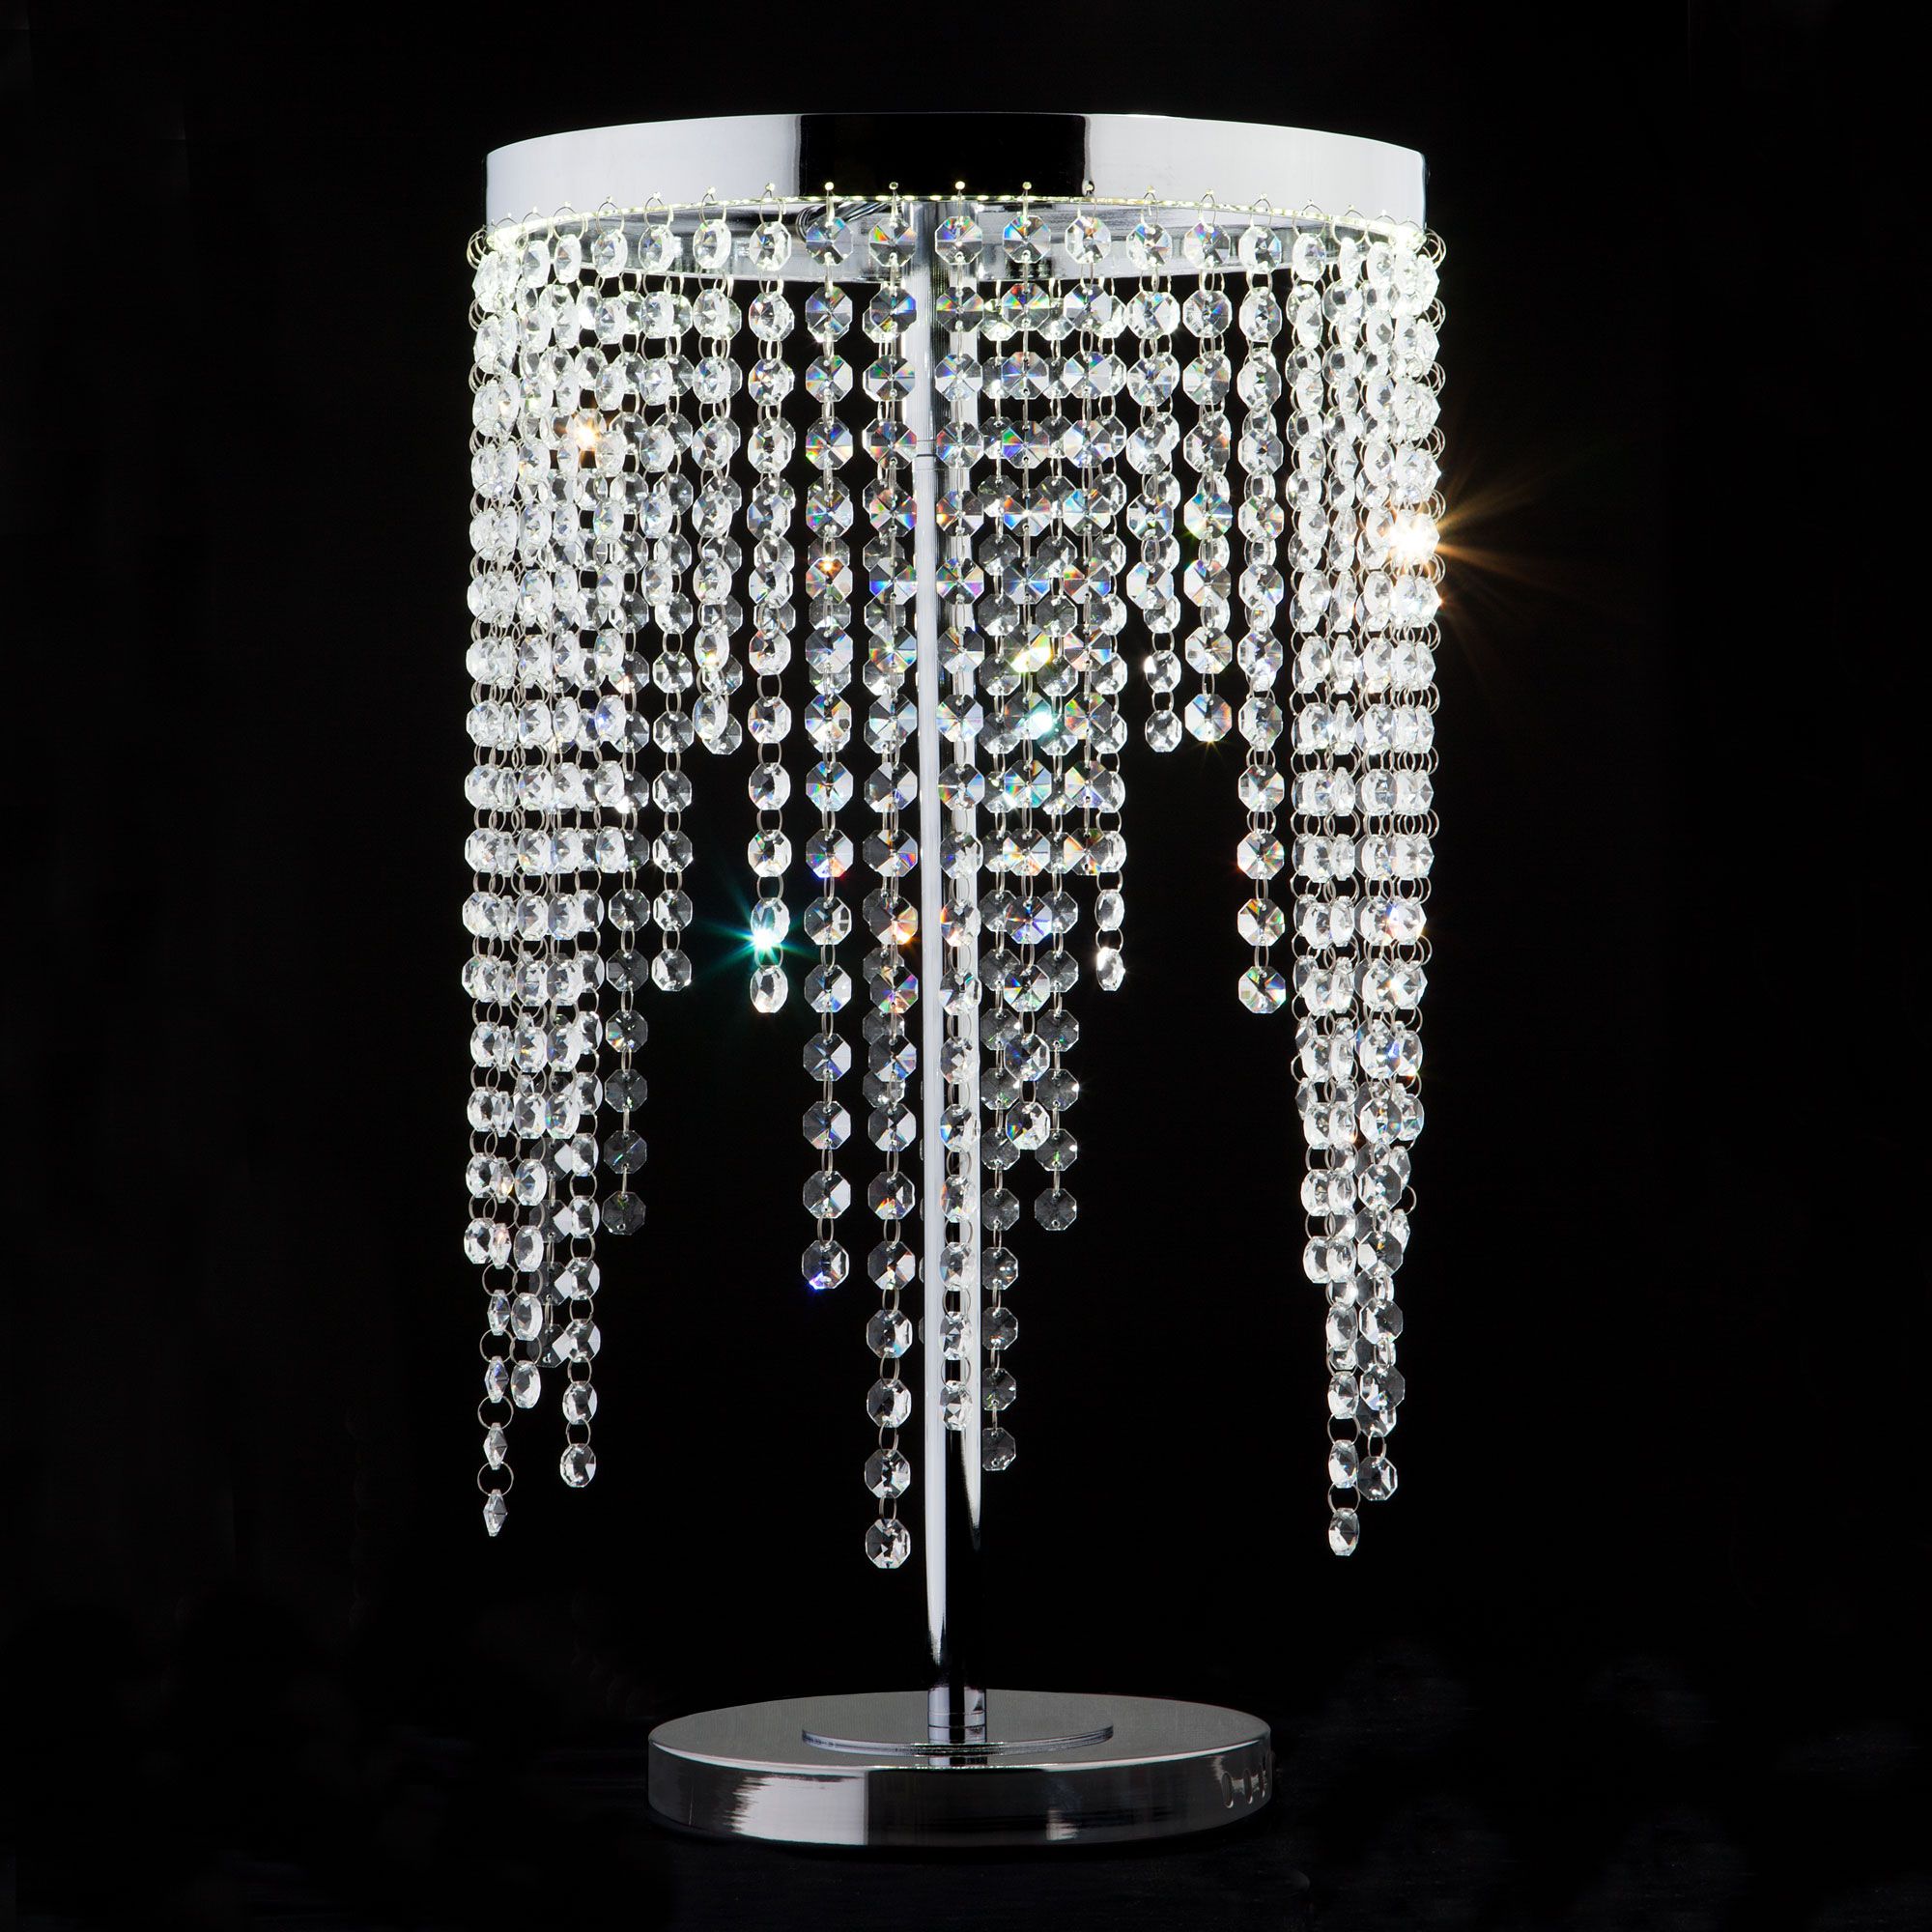 Светодиодная настольная лампа с хрусталем Eurosvet Royal 80412/1 хром. Фото 1